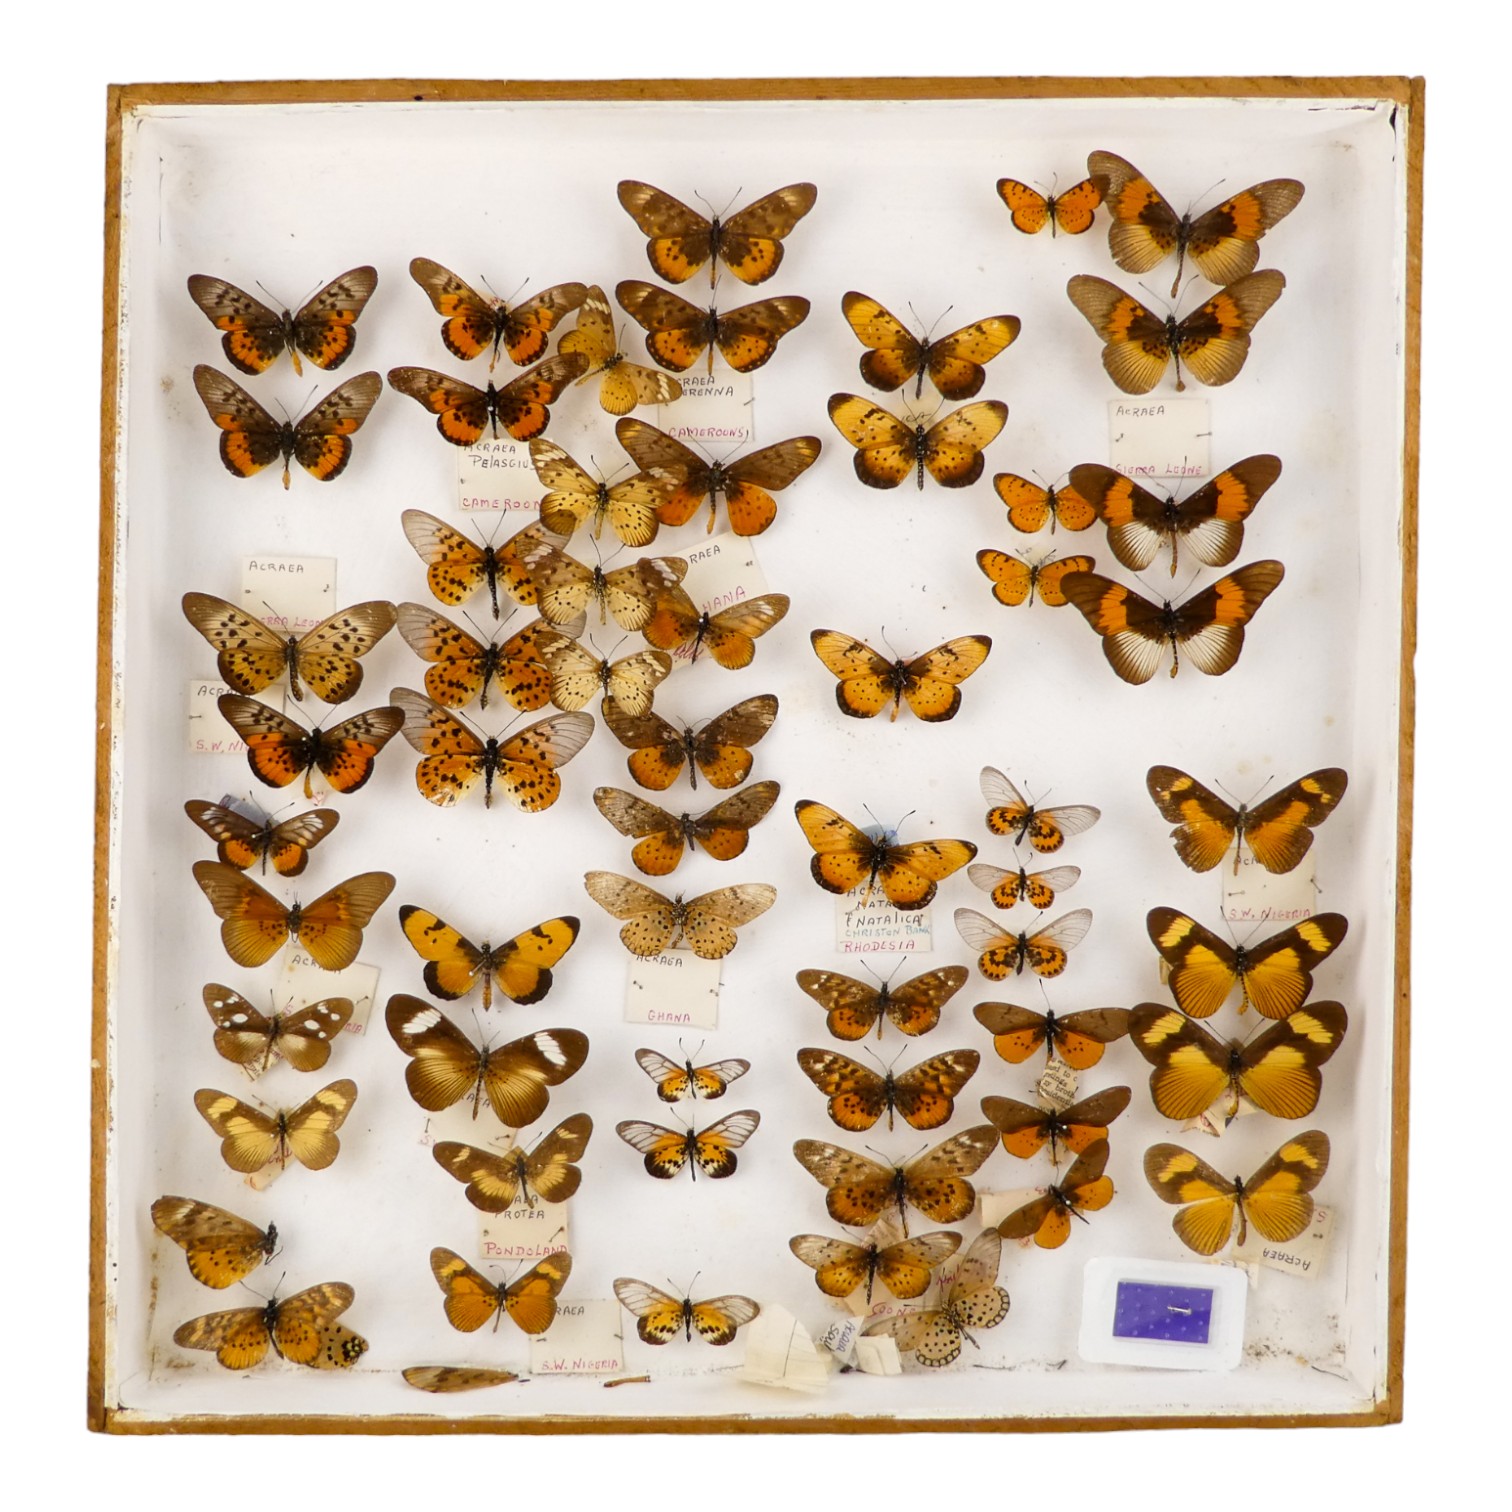 A case of butterflies in five rows - including varieties of Acraea